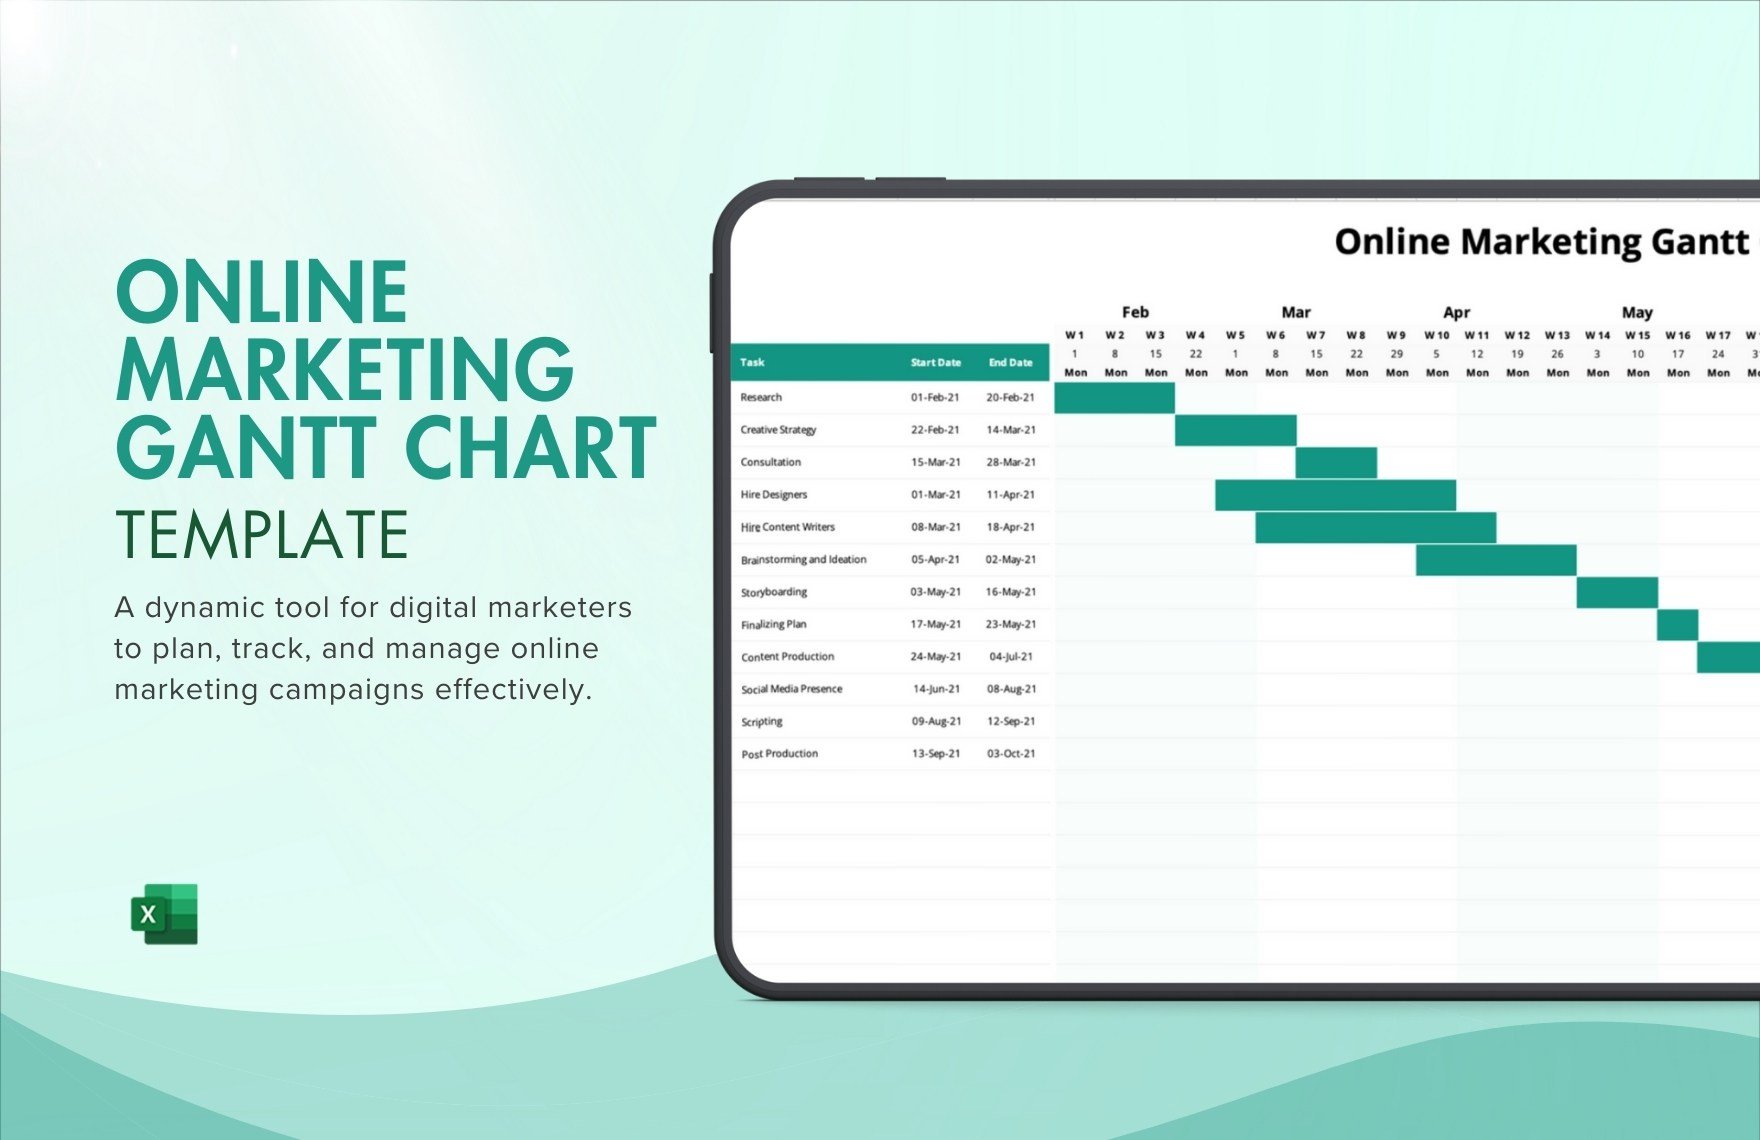 Online Marketing Gantt Chart Template in Excel